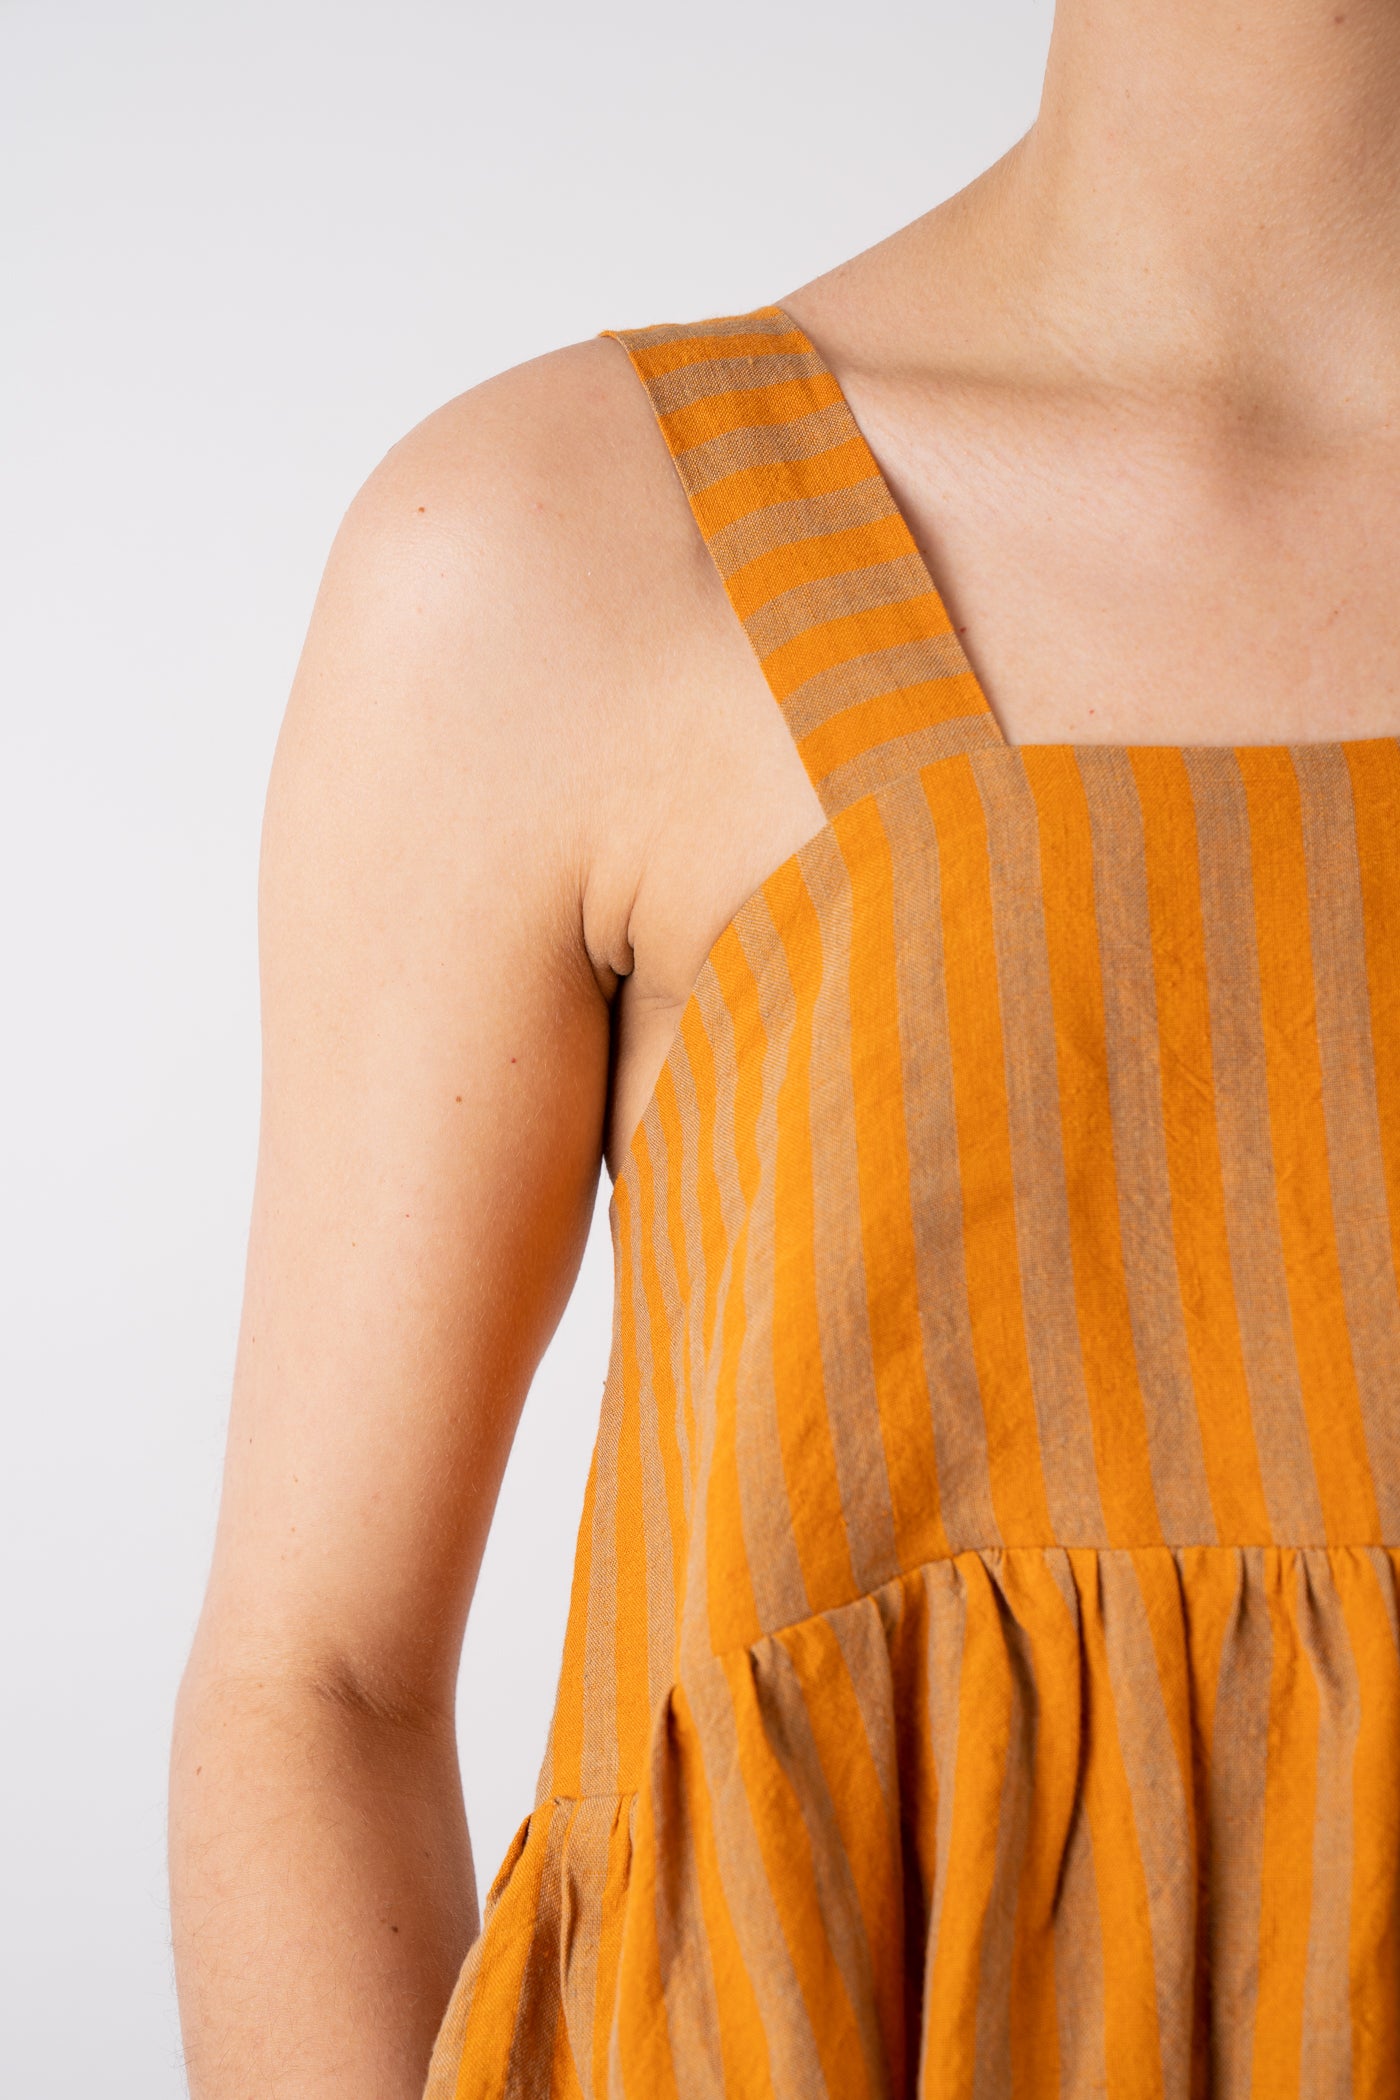 Cawley Studio 100% Irish Stripe Linen Elba Dress in Orange and Terracotta handmade in London shoulder strap detail and gathered front